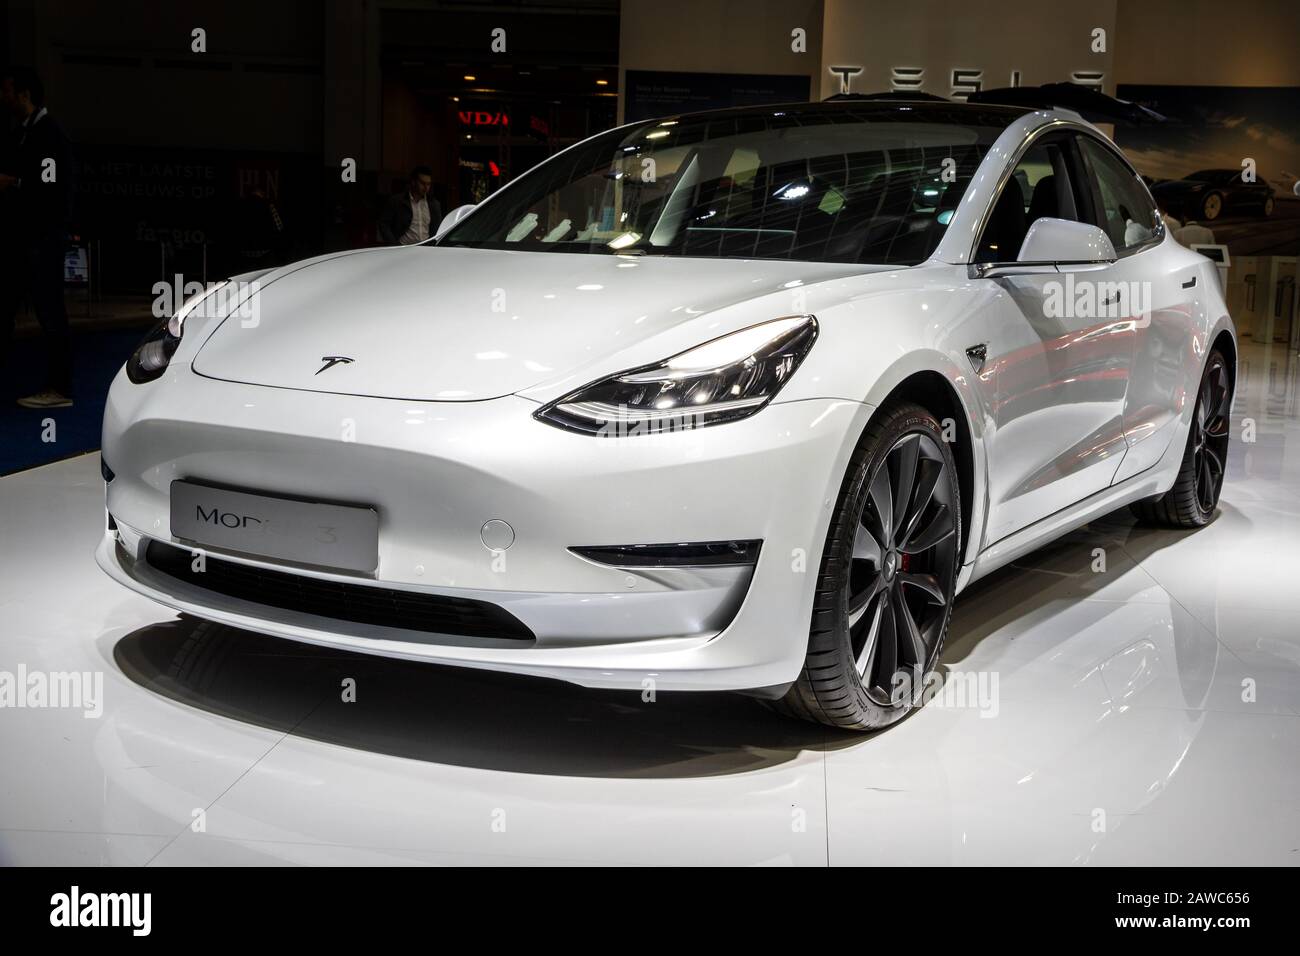 Brüssel - Jan 9, 2020: Neue Tesla Modell 3 Elektroauto auf dem Brüsseler Autosalon 2020 Motor Show präsentiert. Stockfoto